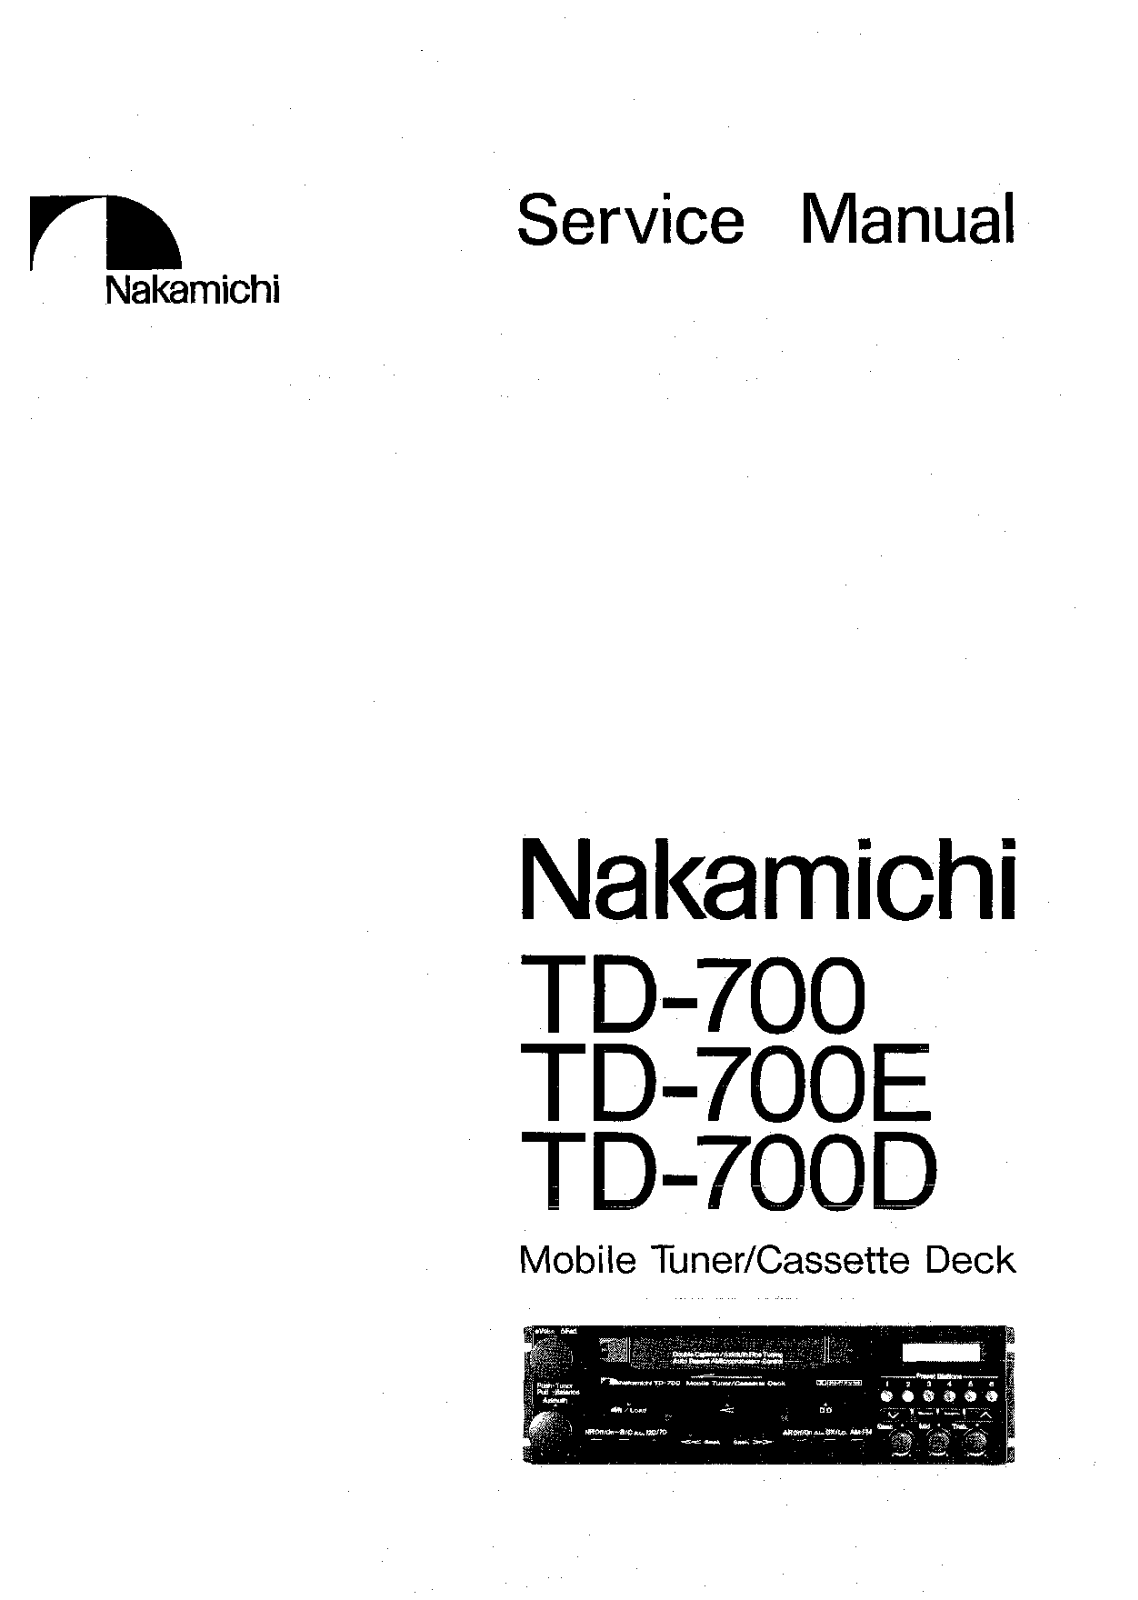 Nakamichi TD-700-D, TD-700-E Service manual